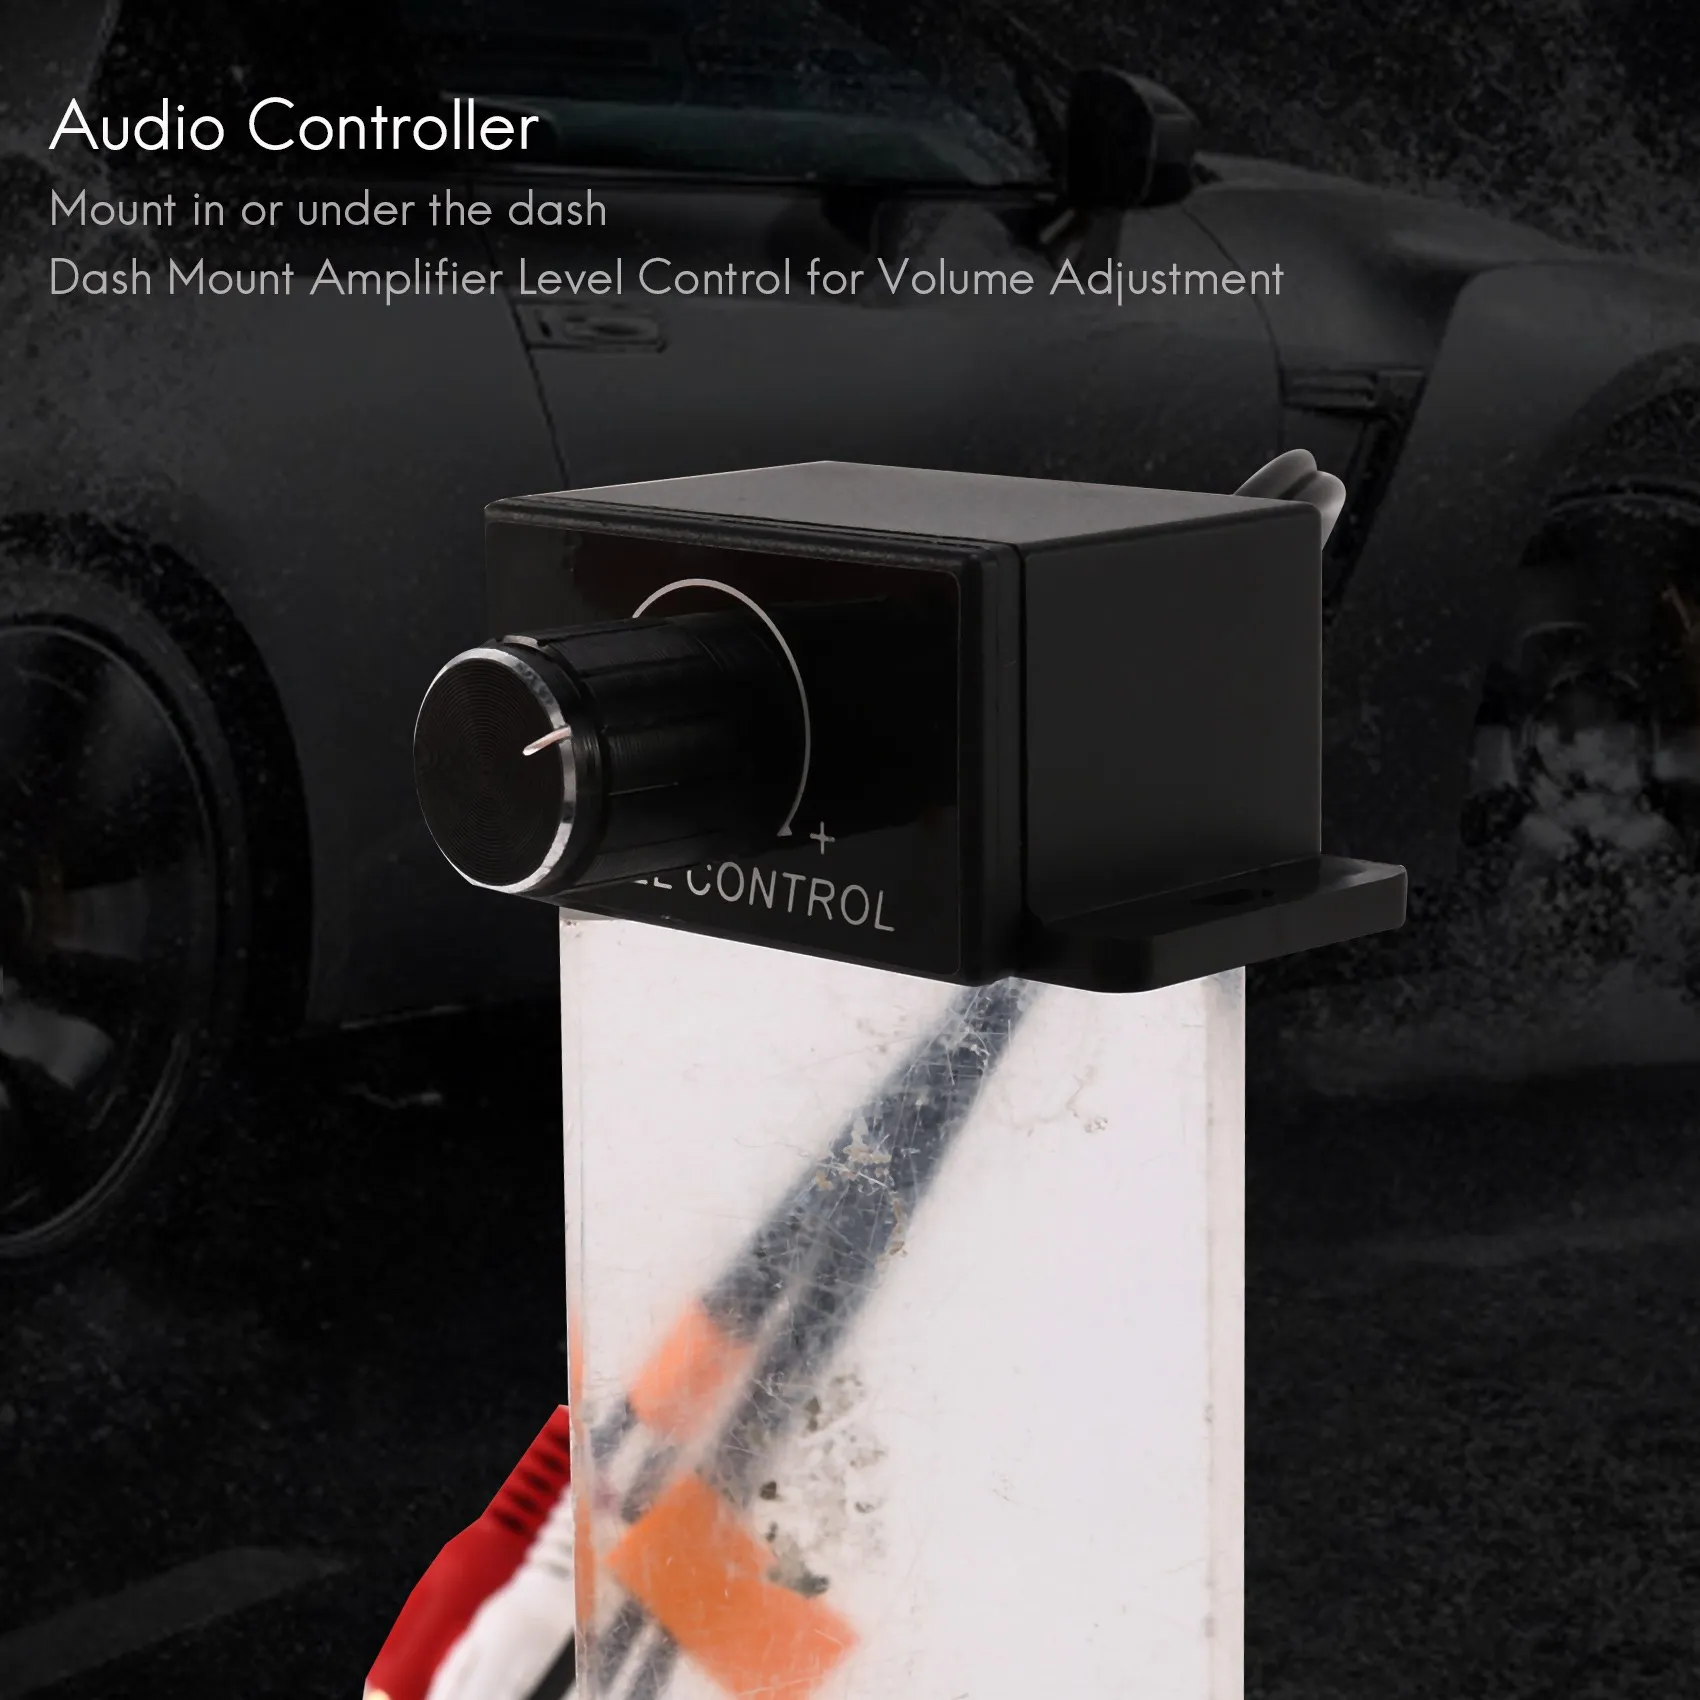 Car Home Audio Amplifier Bass RCA Gain Level Volume Control Knob LC-1 Black